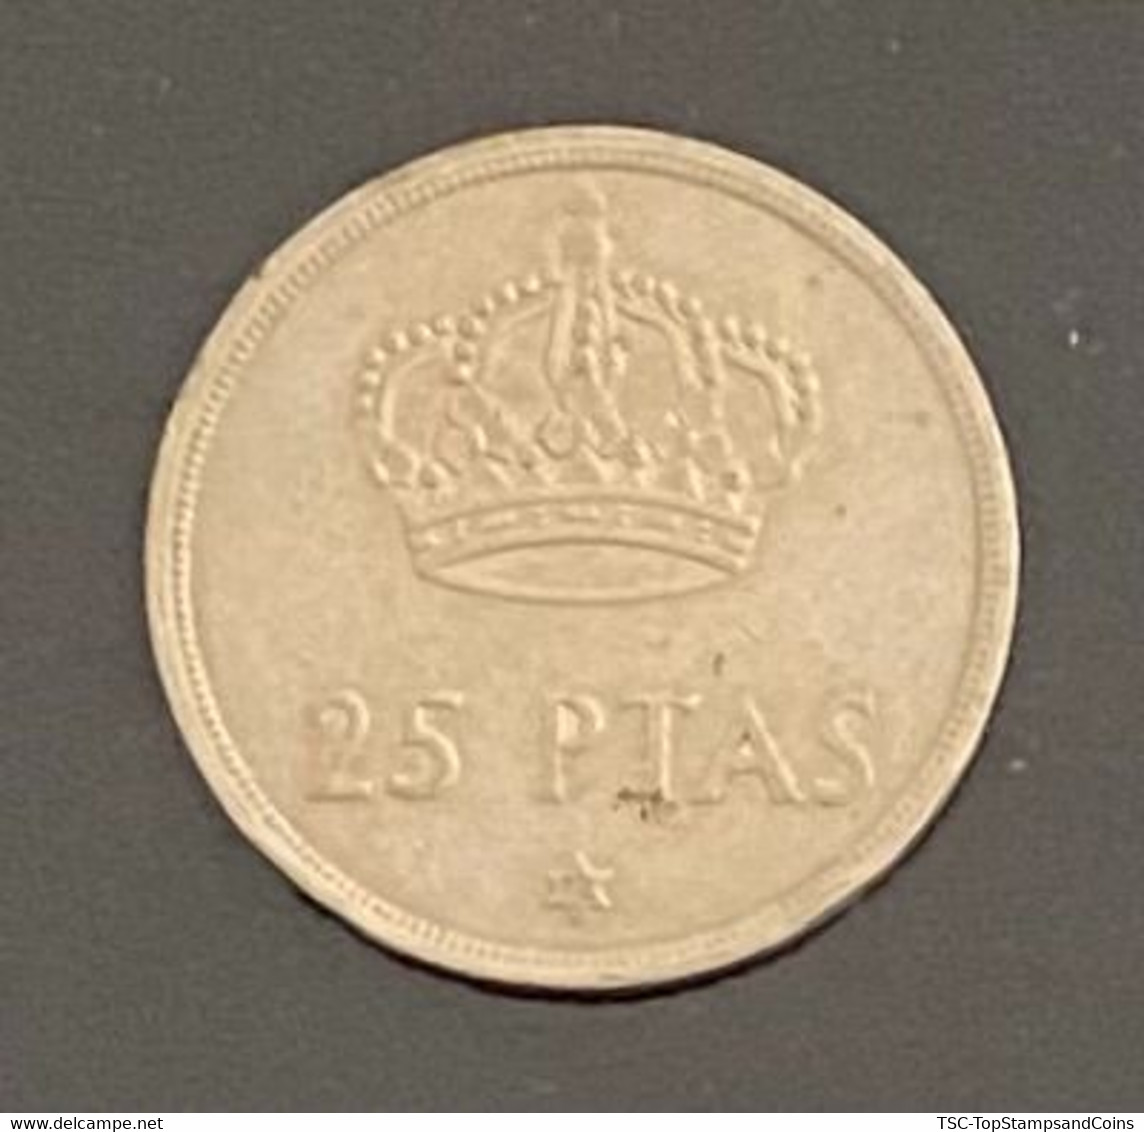 $$ESP1550 - King Juan Carlos I - 25 Pesetas Coin - Spain - 1975 - 25 Pesetas